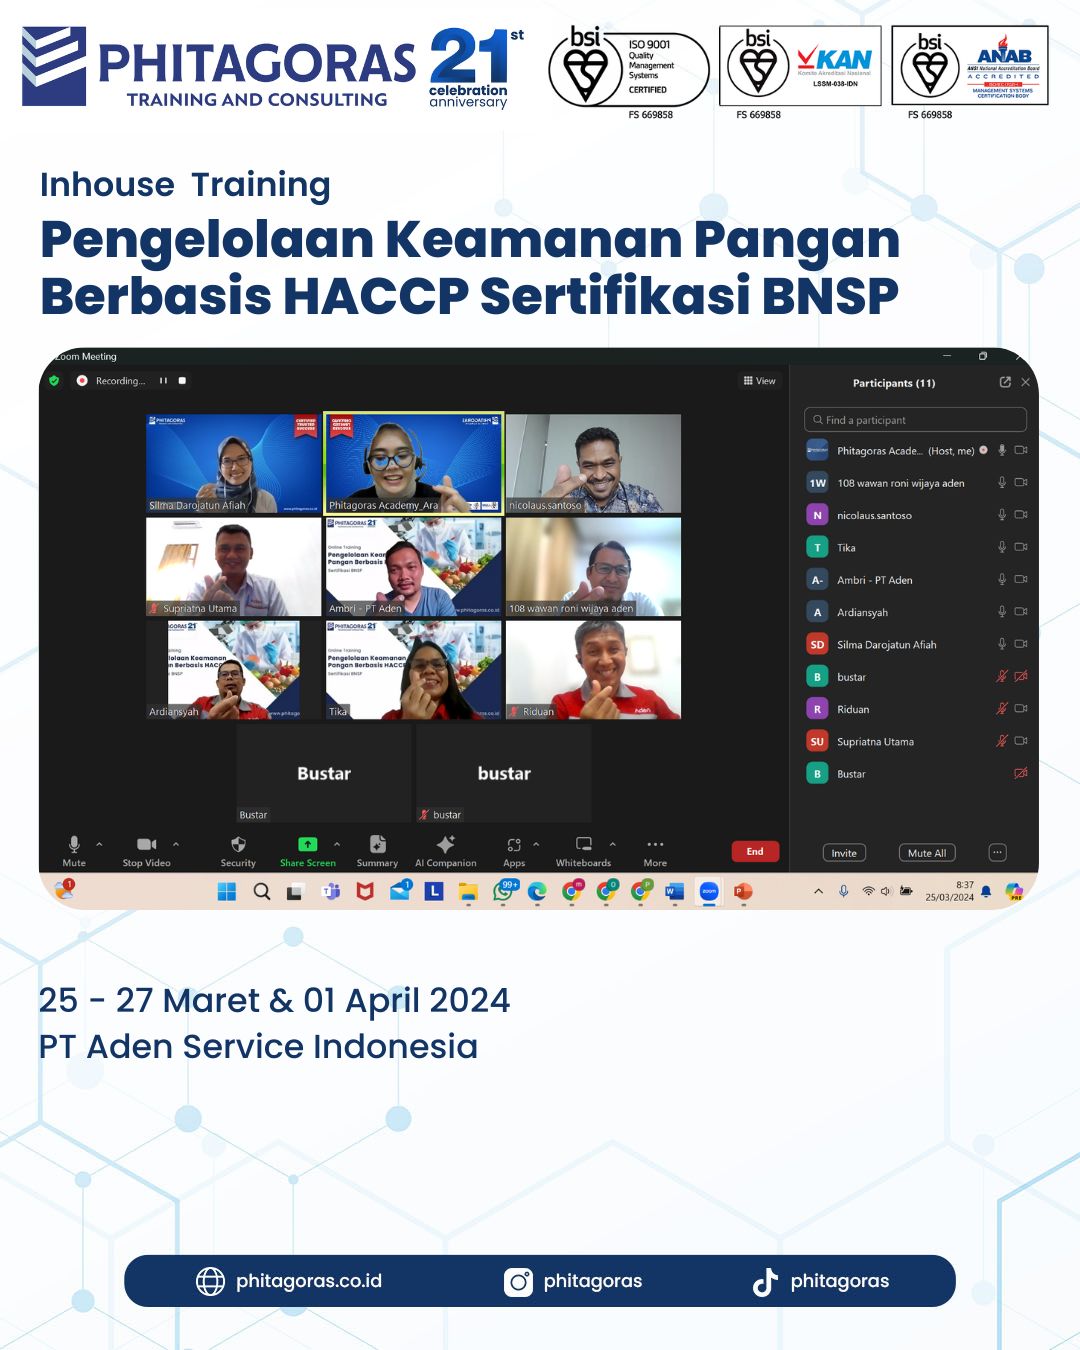 Inhouse Training Pengelolaan Keamanan Pangan Berbasis HACCP Sertifikasi BNSP - PT Aden Service Indonesia